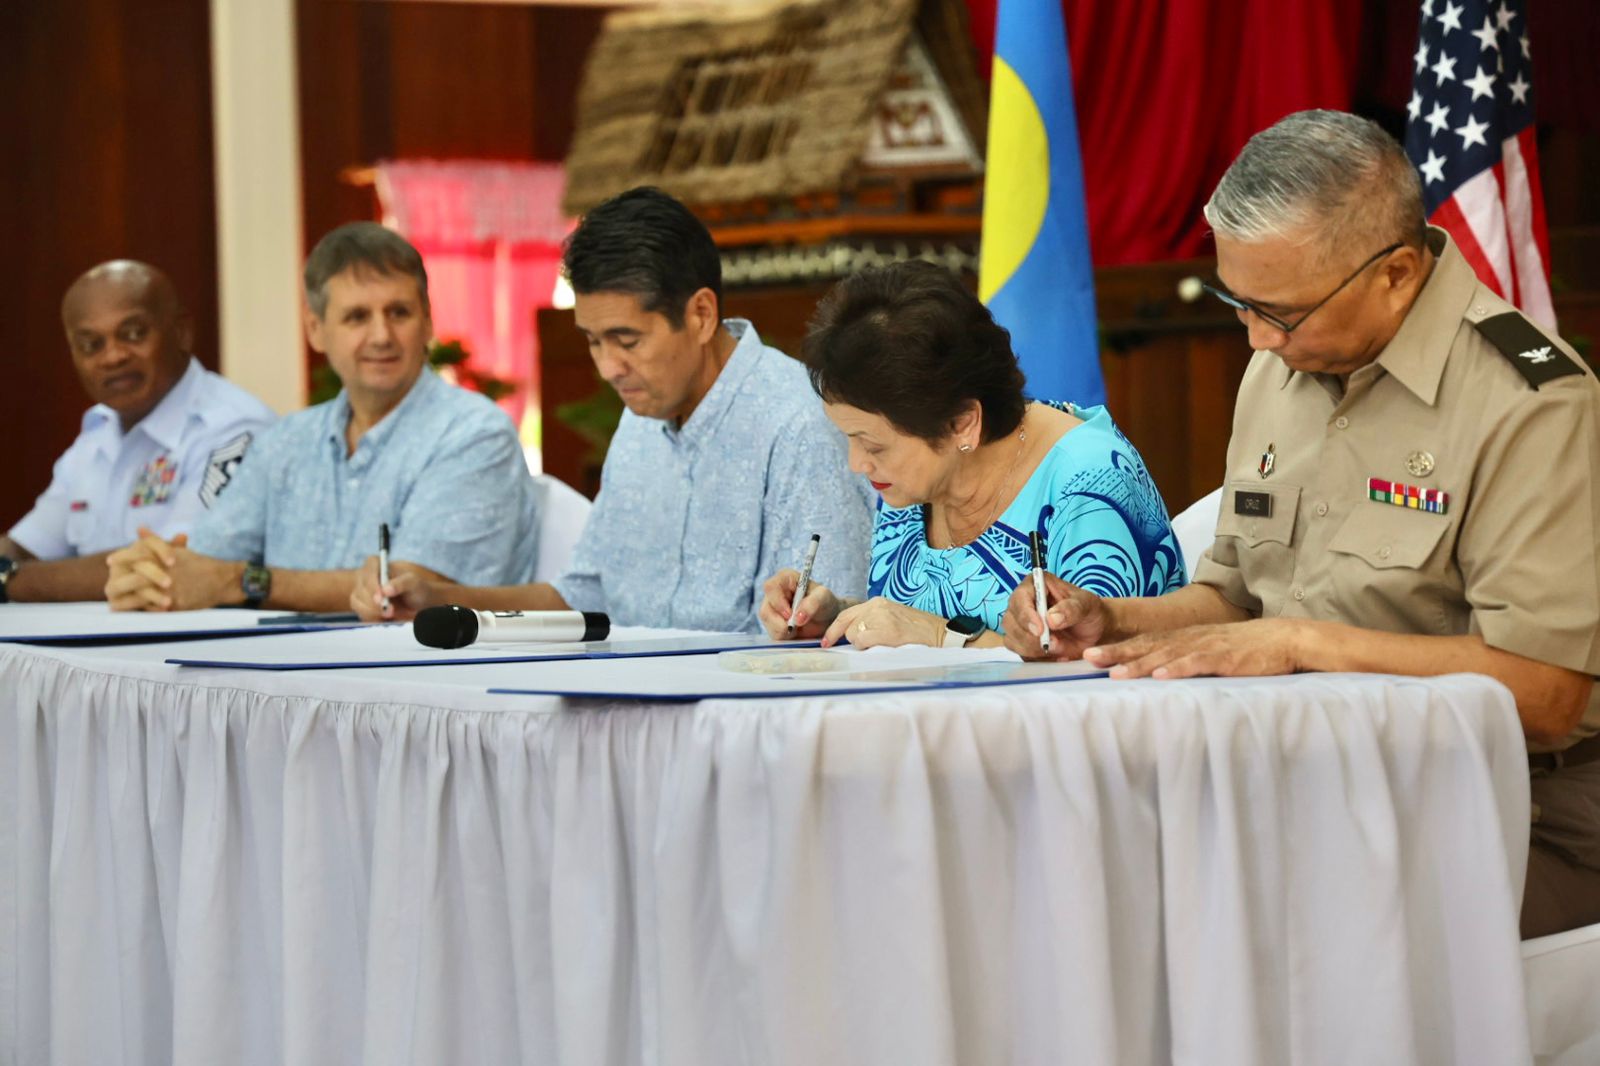 Palau, Guam National Guard Sign Historic Partnership